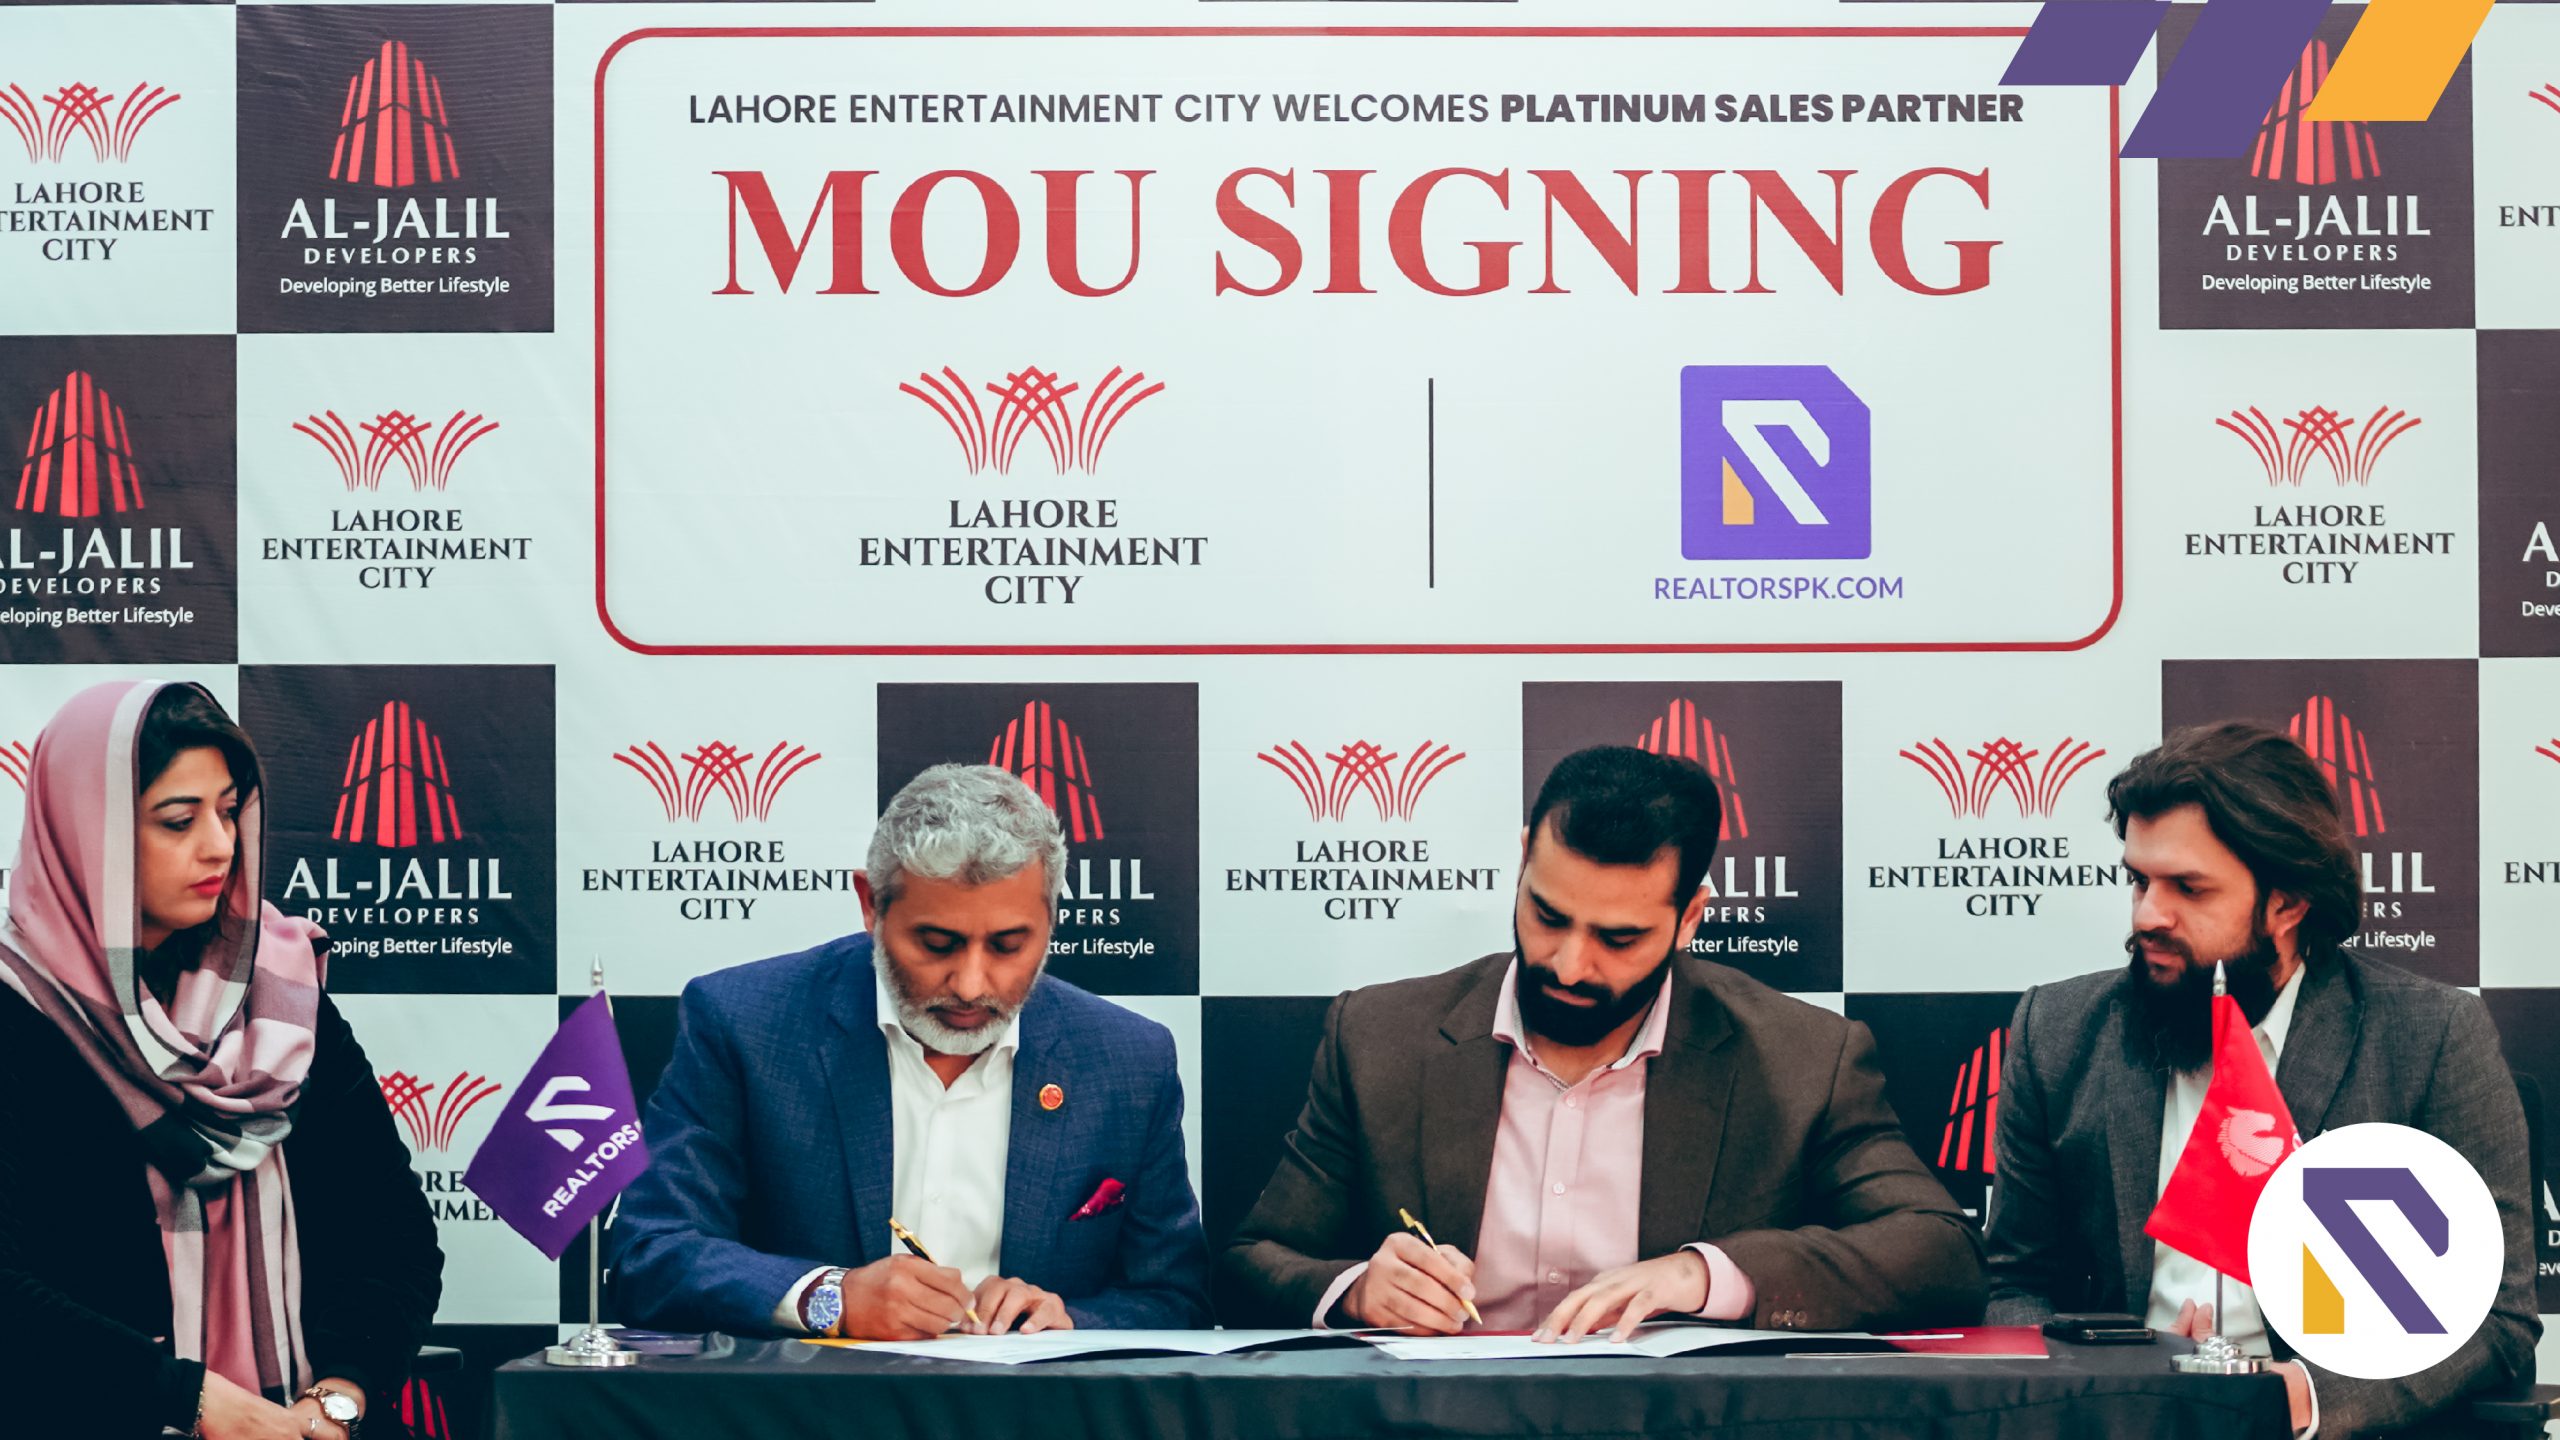 Realtorspk.com Becomes Official Sales Partner for Lahore Entertainment City's Housing Project